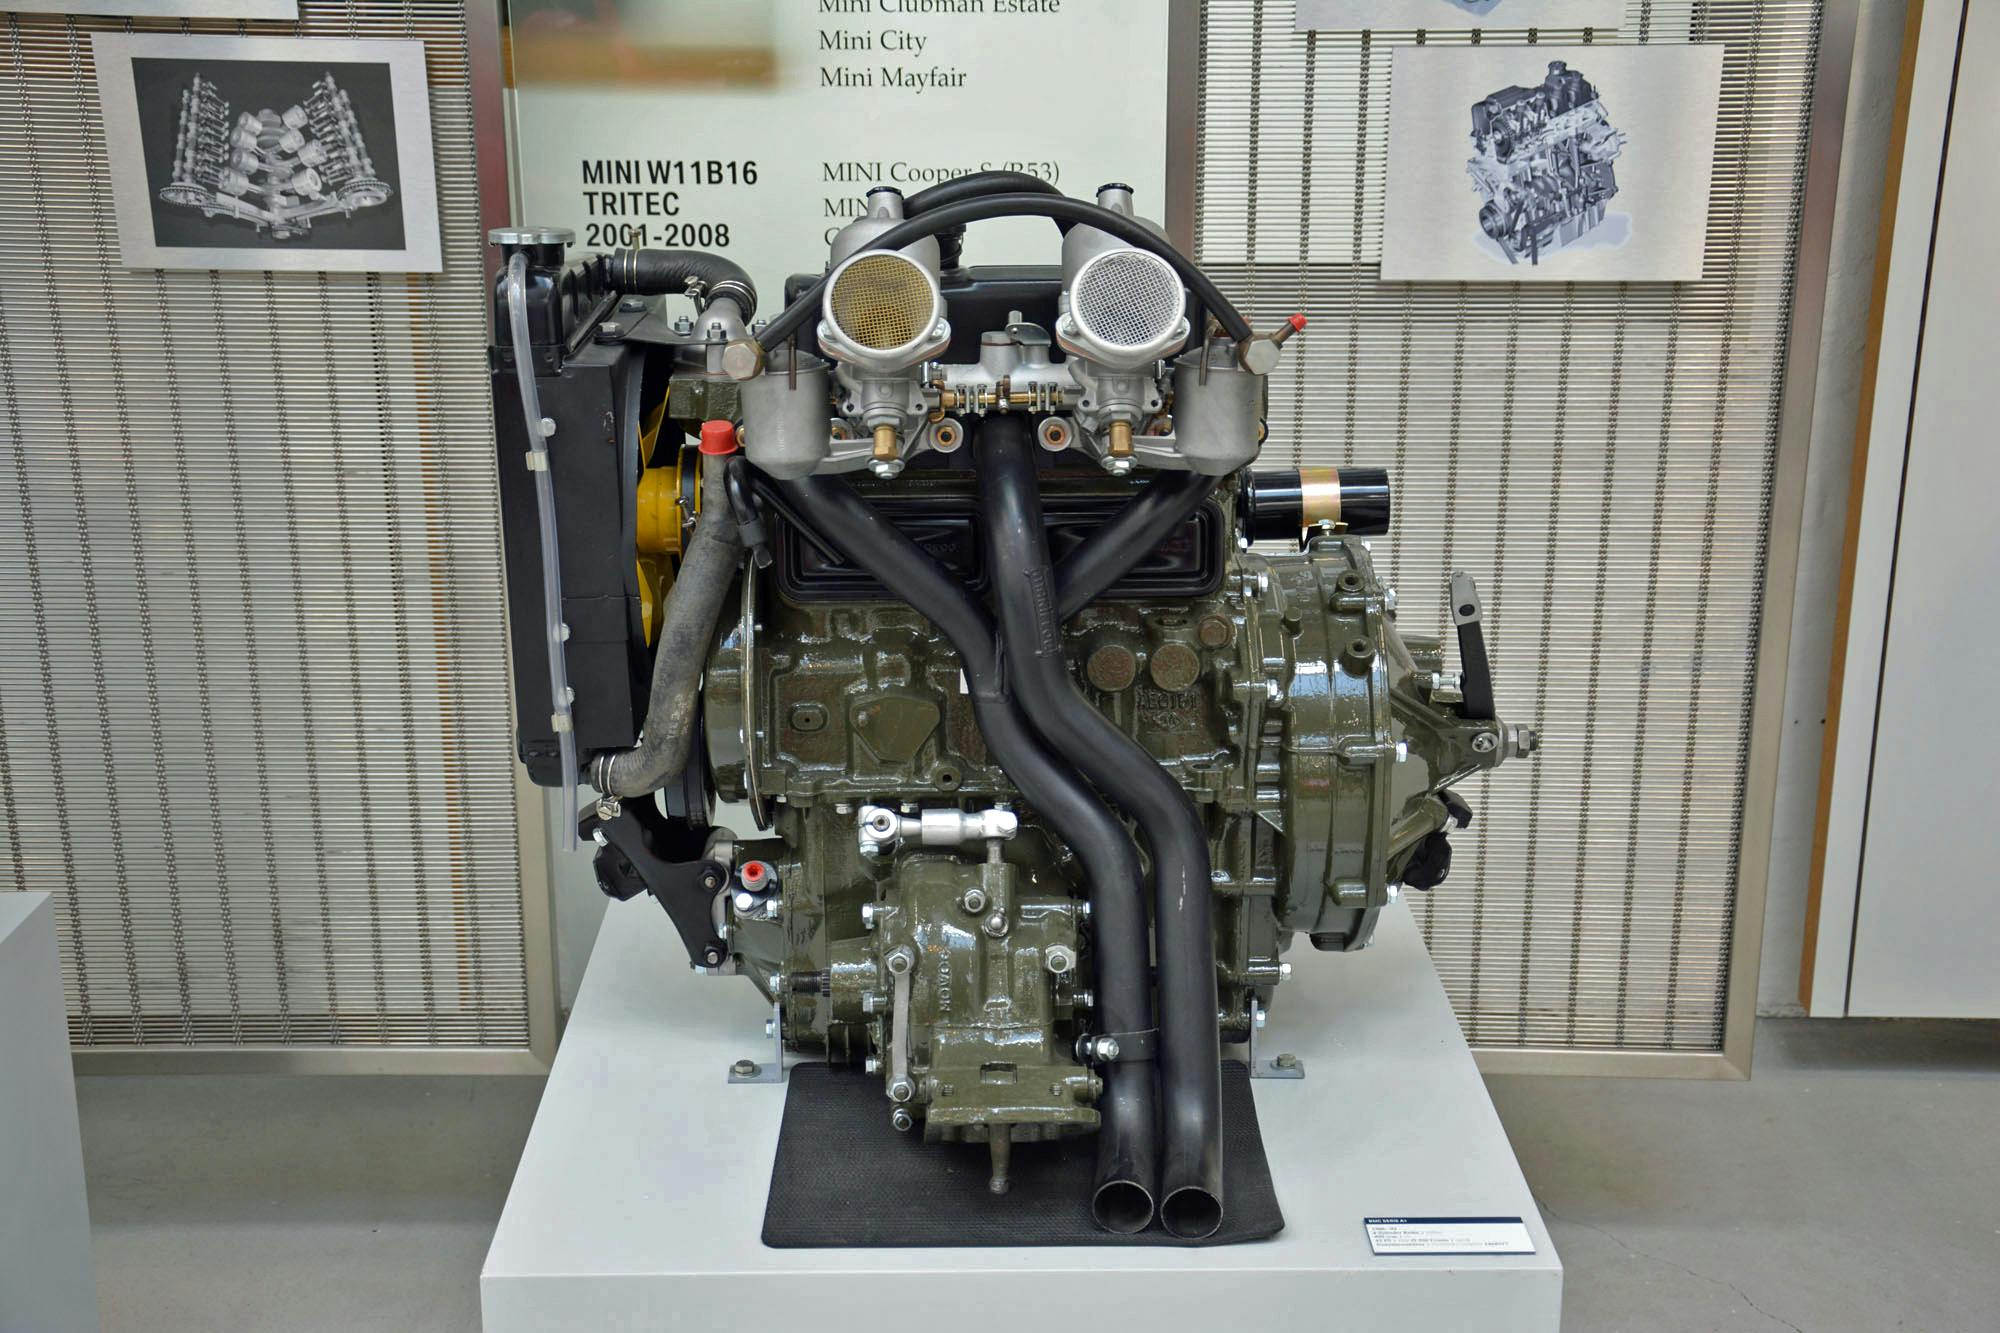 bmw classic center munich mini W11b16 engine